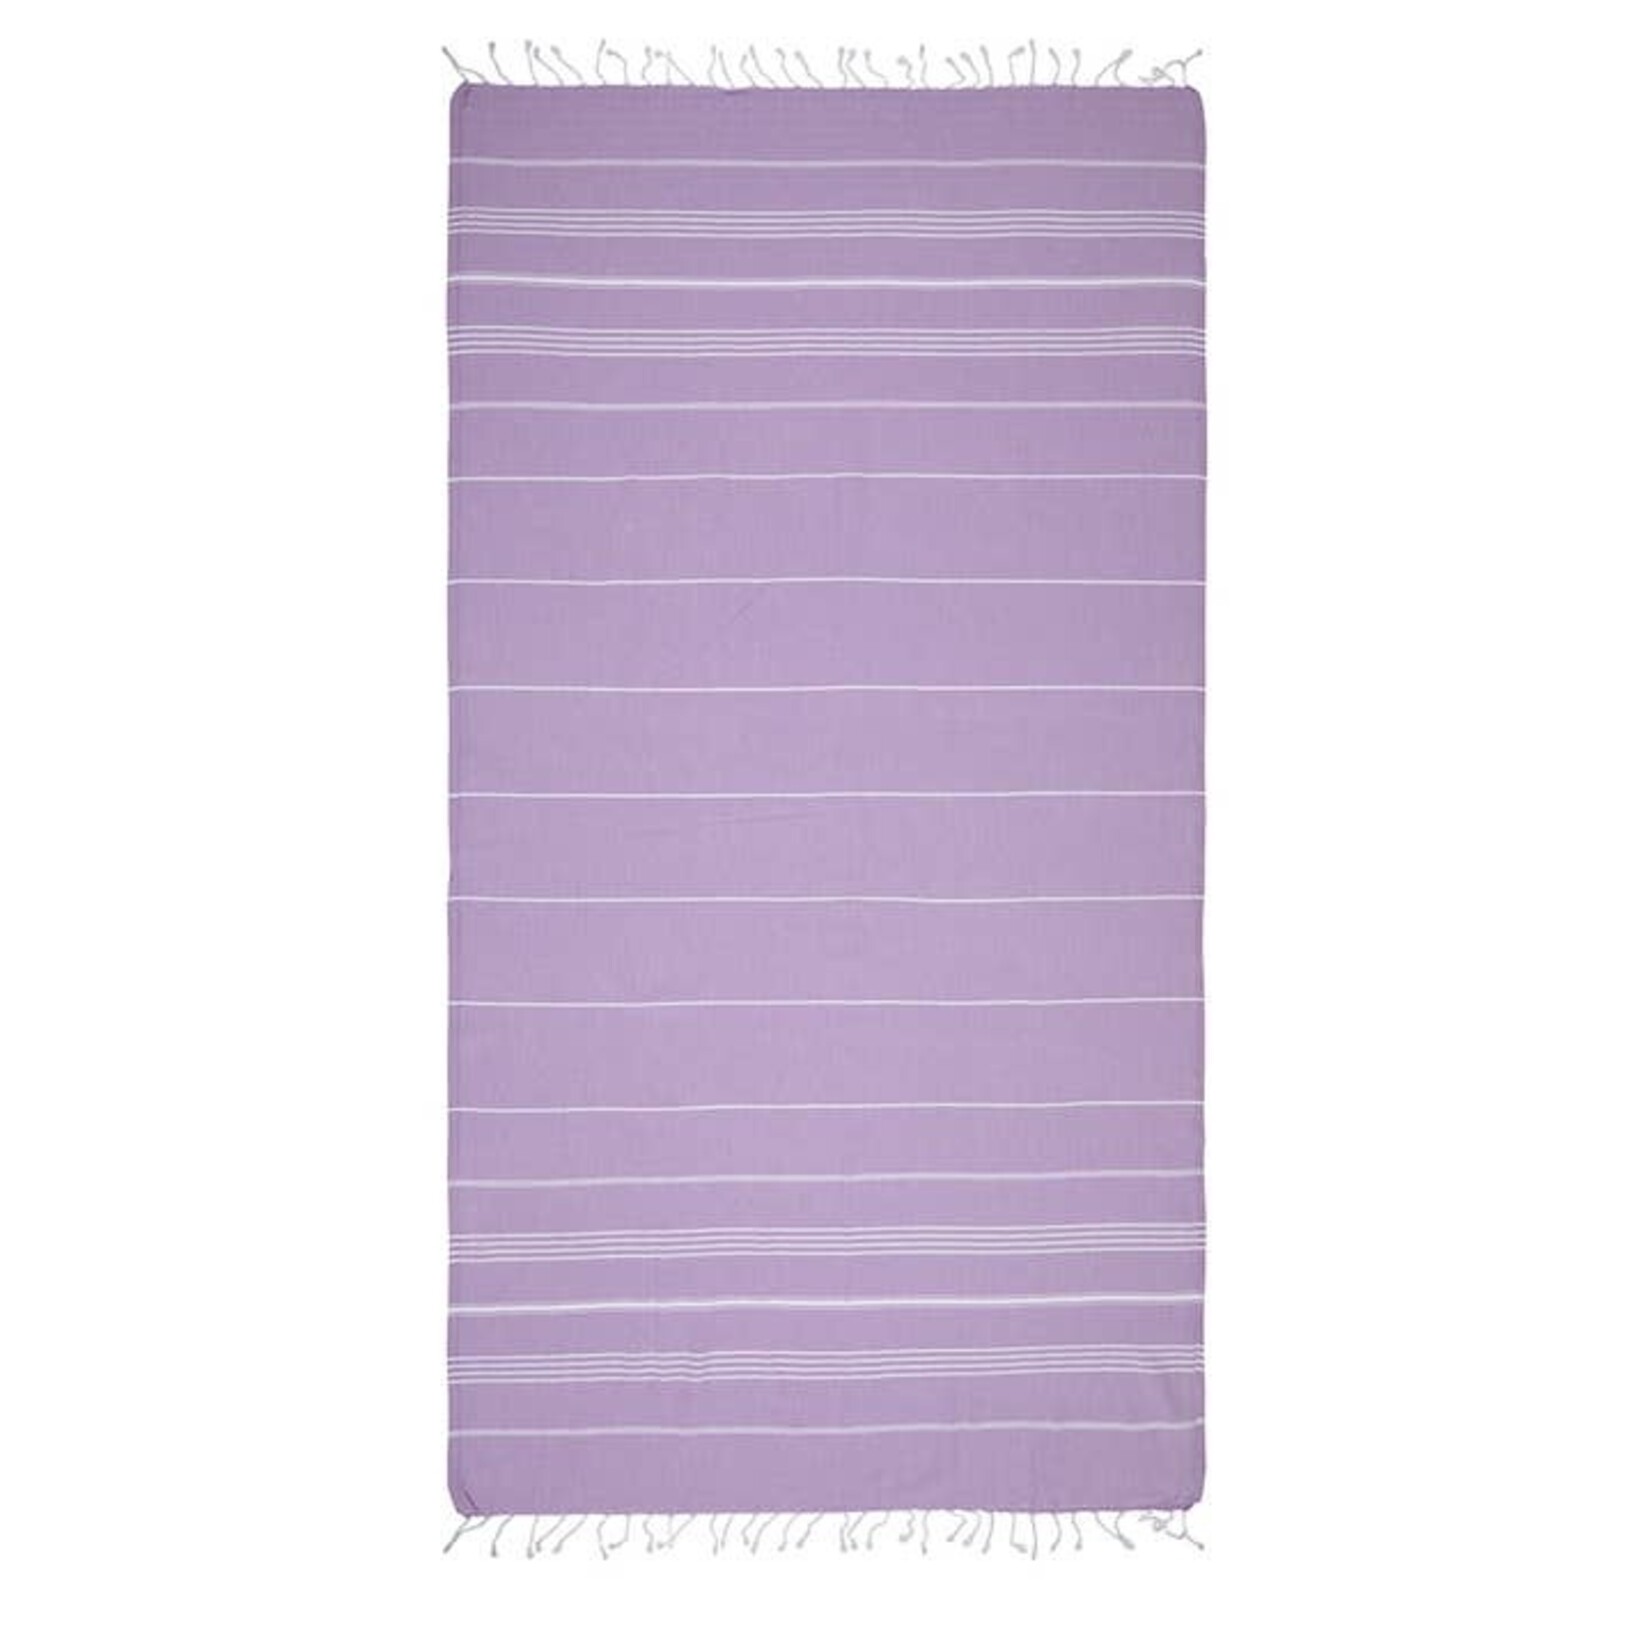 Turkish Towel - Lilac Stripe